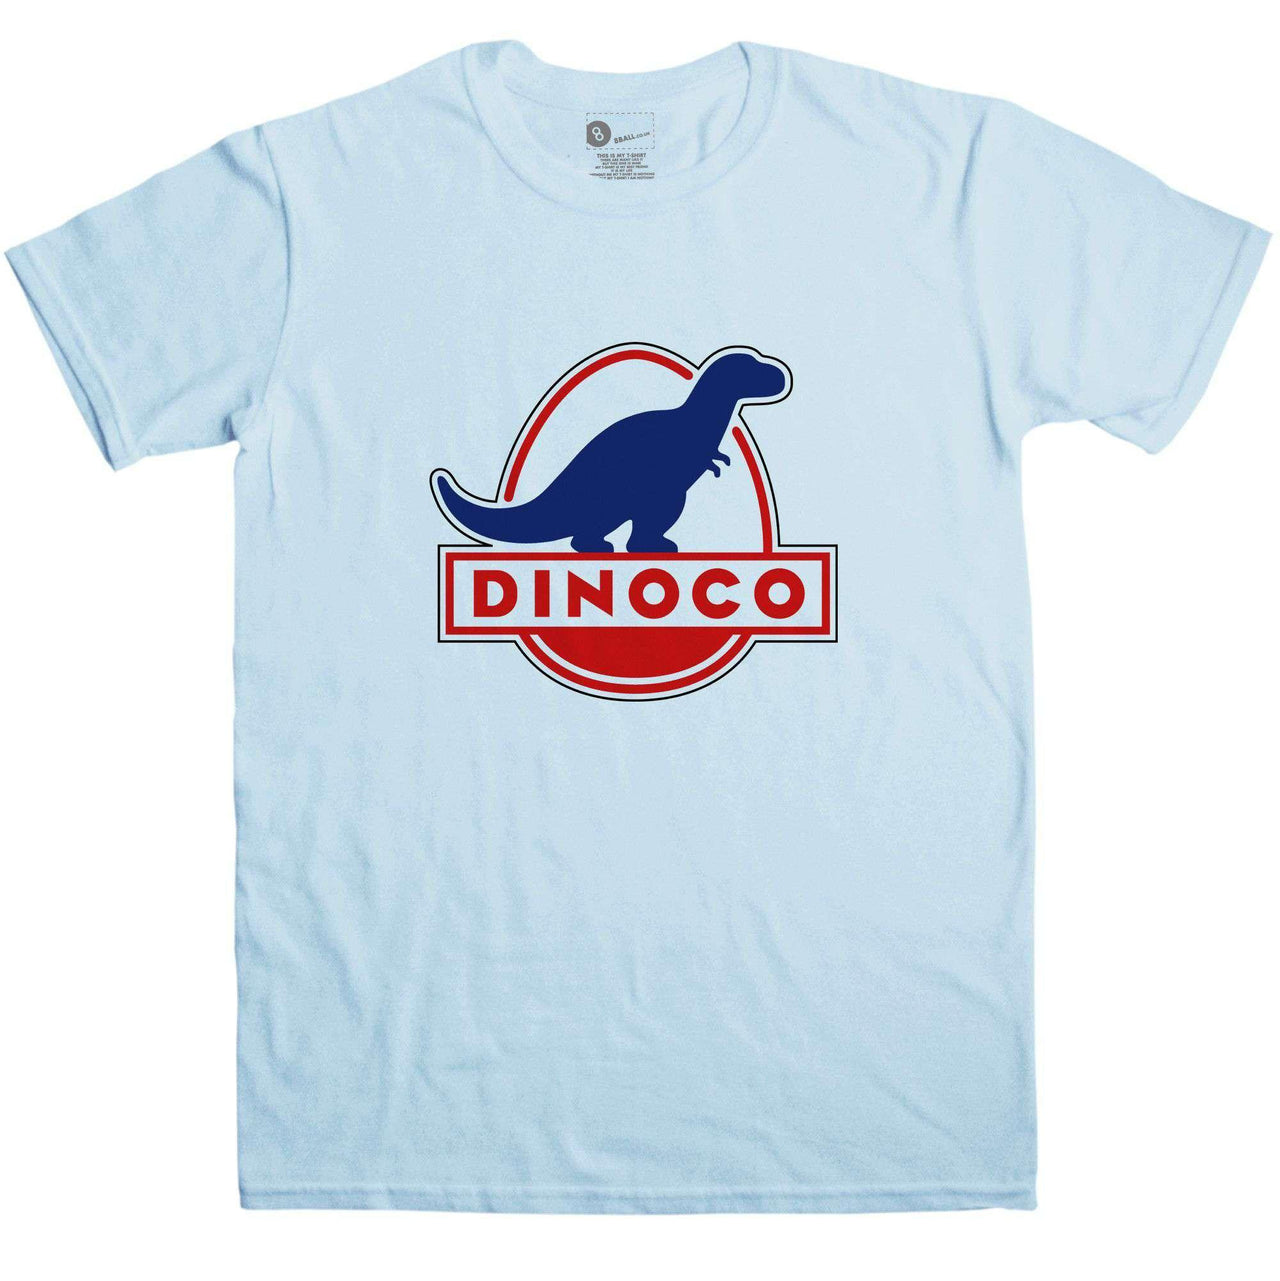 Dinoco Graphic T-Shirt For Men 8Ball